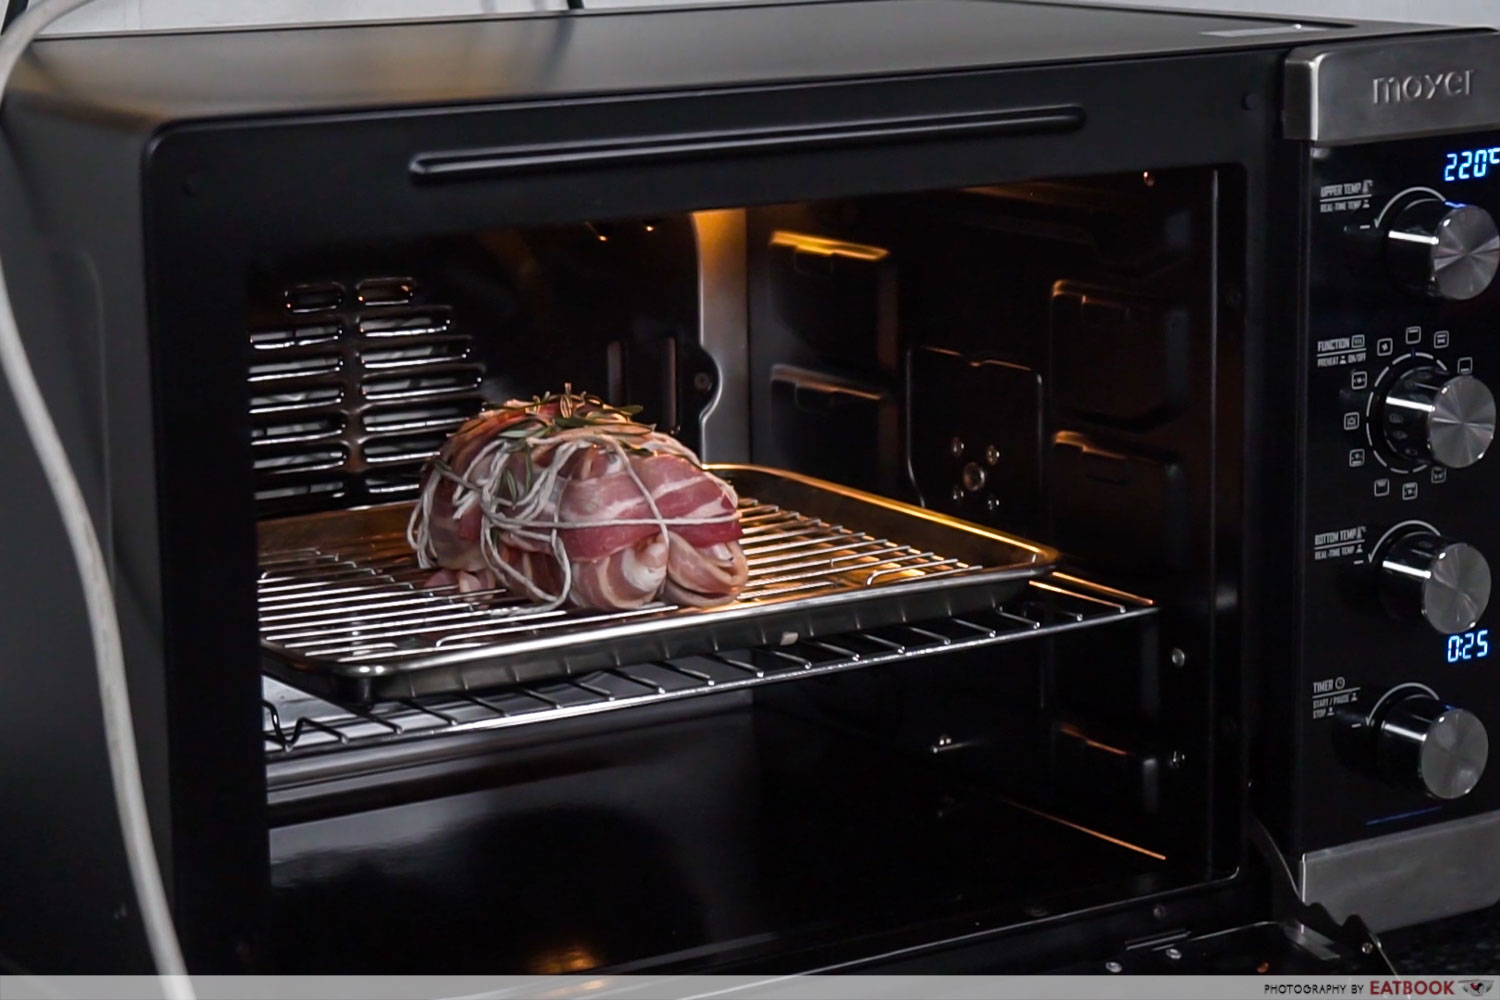 Gotcha Pork Roast - Place pork roast in oven